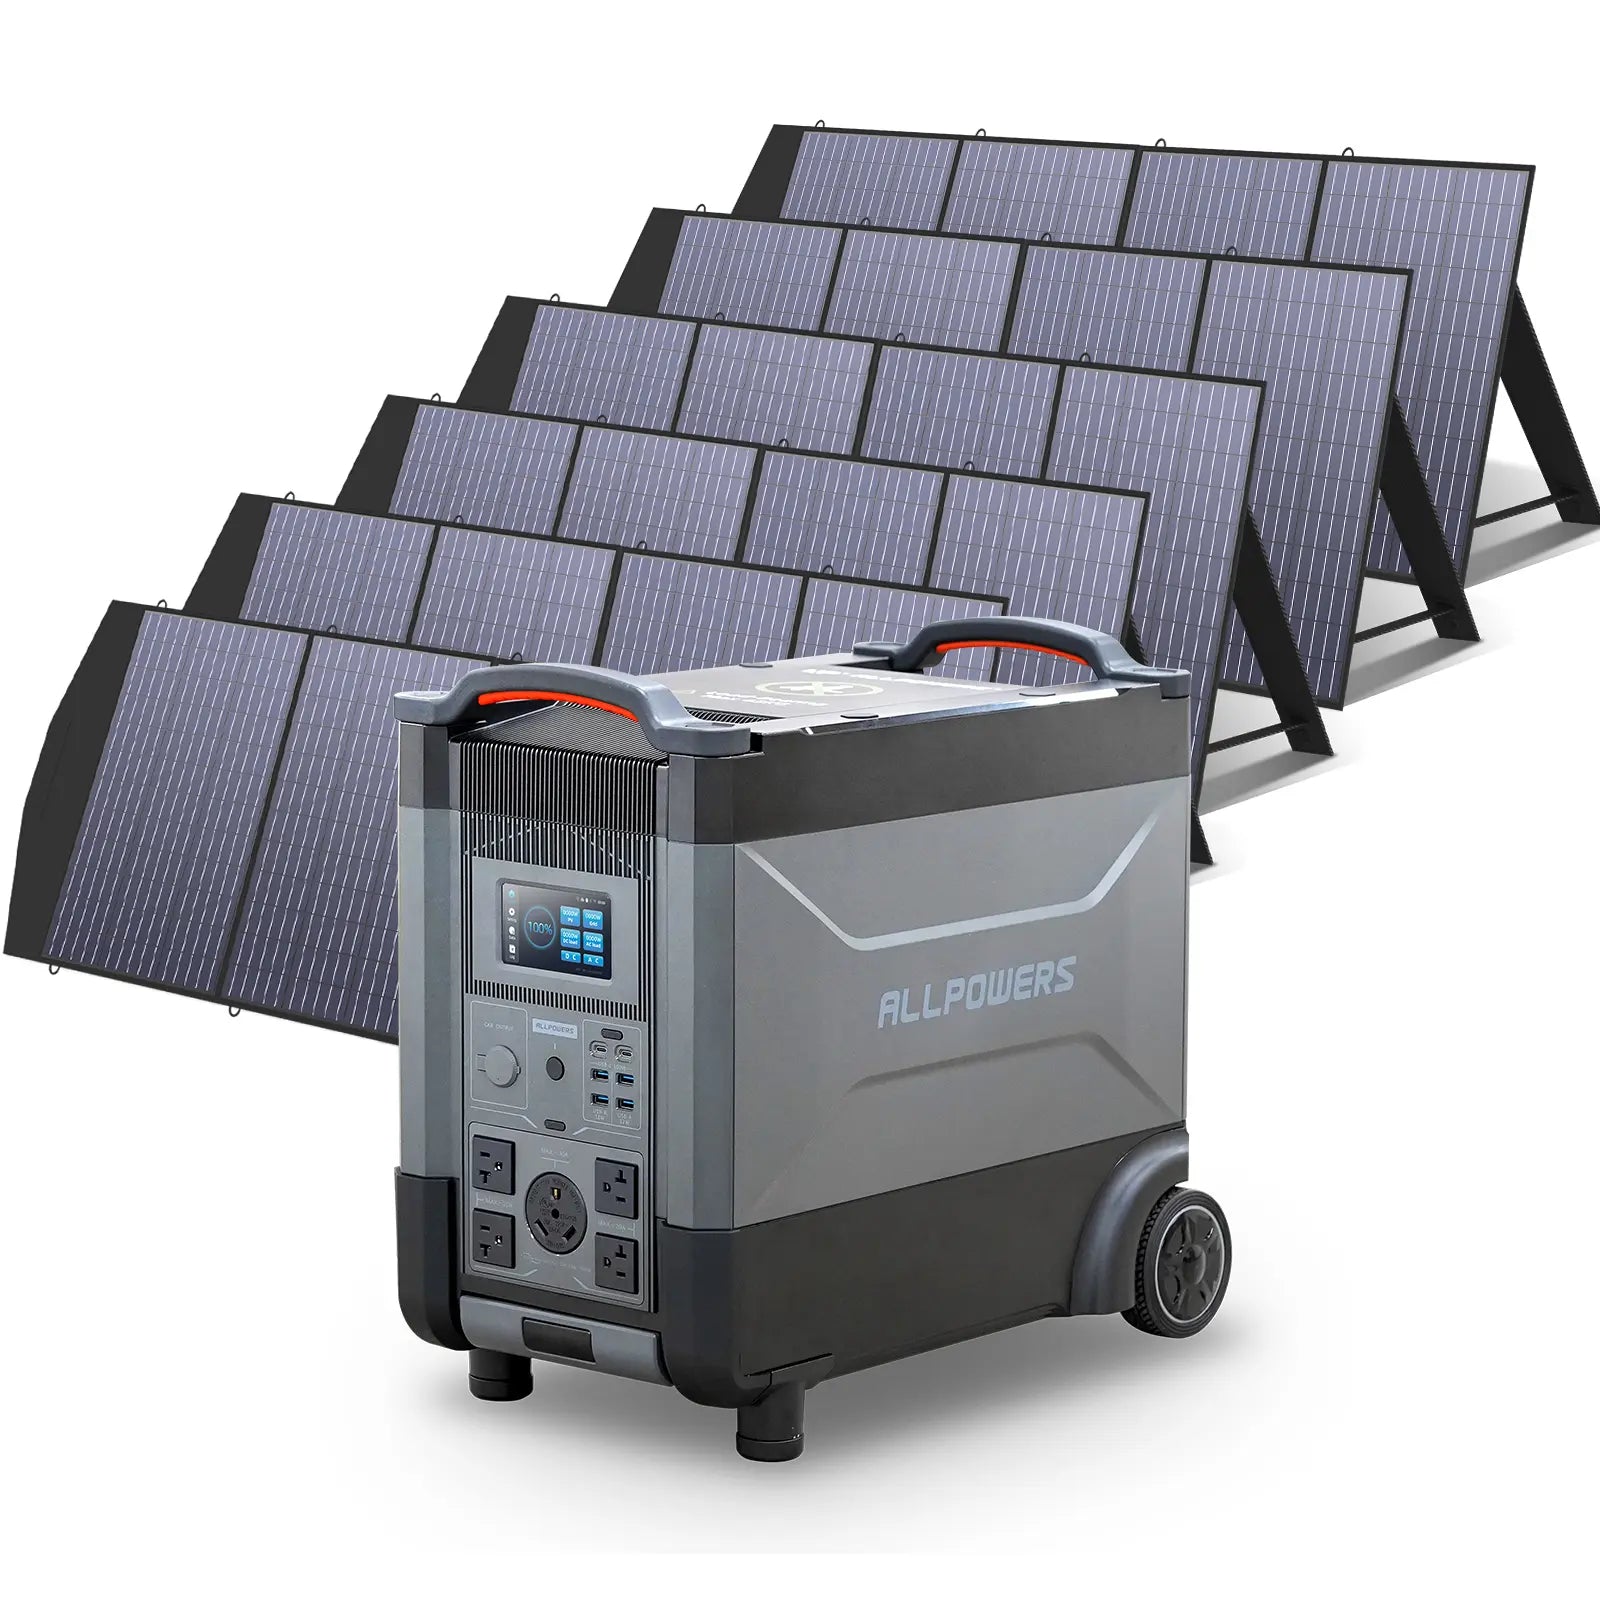 ALLPOWERS Solar Generator Kit 3600W (R4000 + SP033 200W Solar Panel)